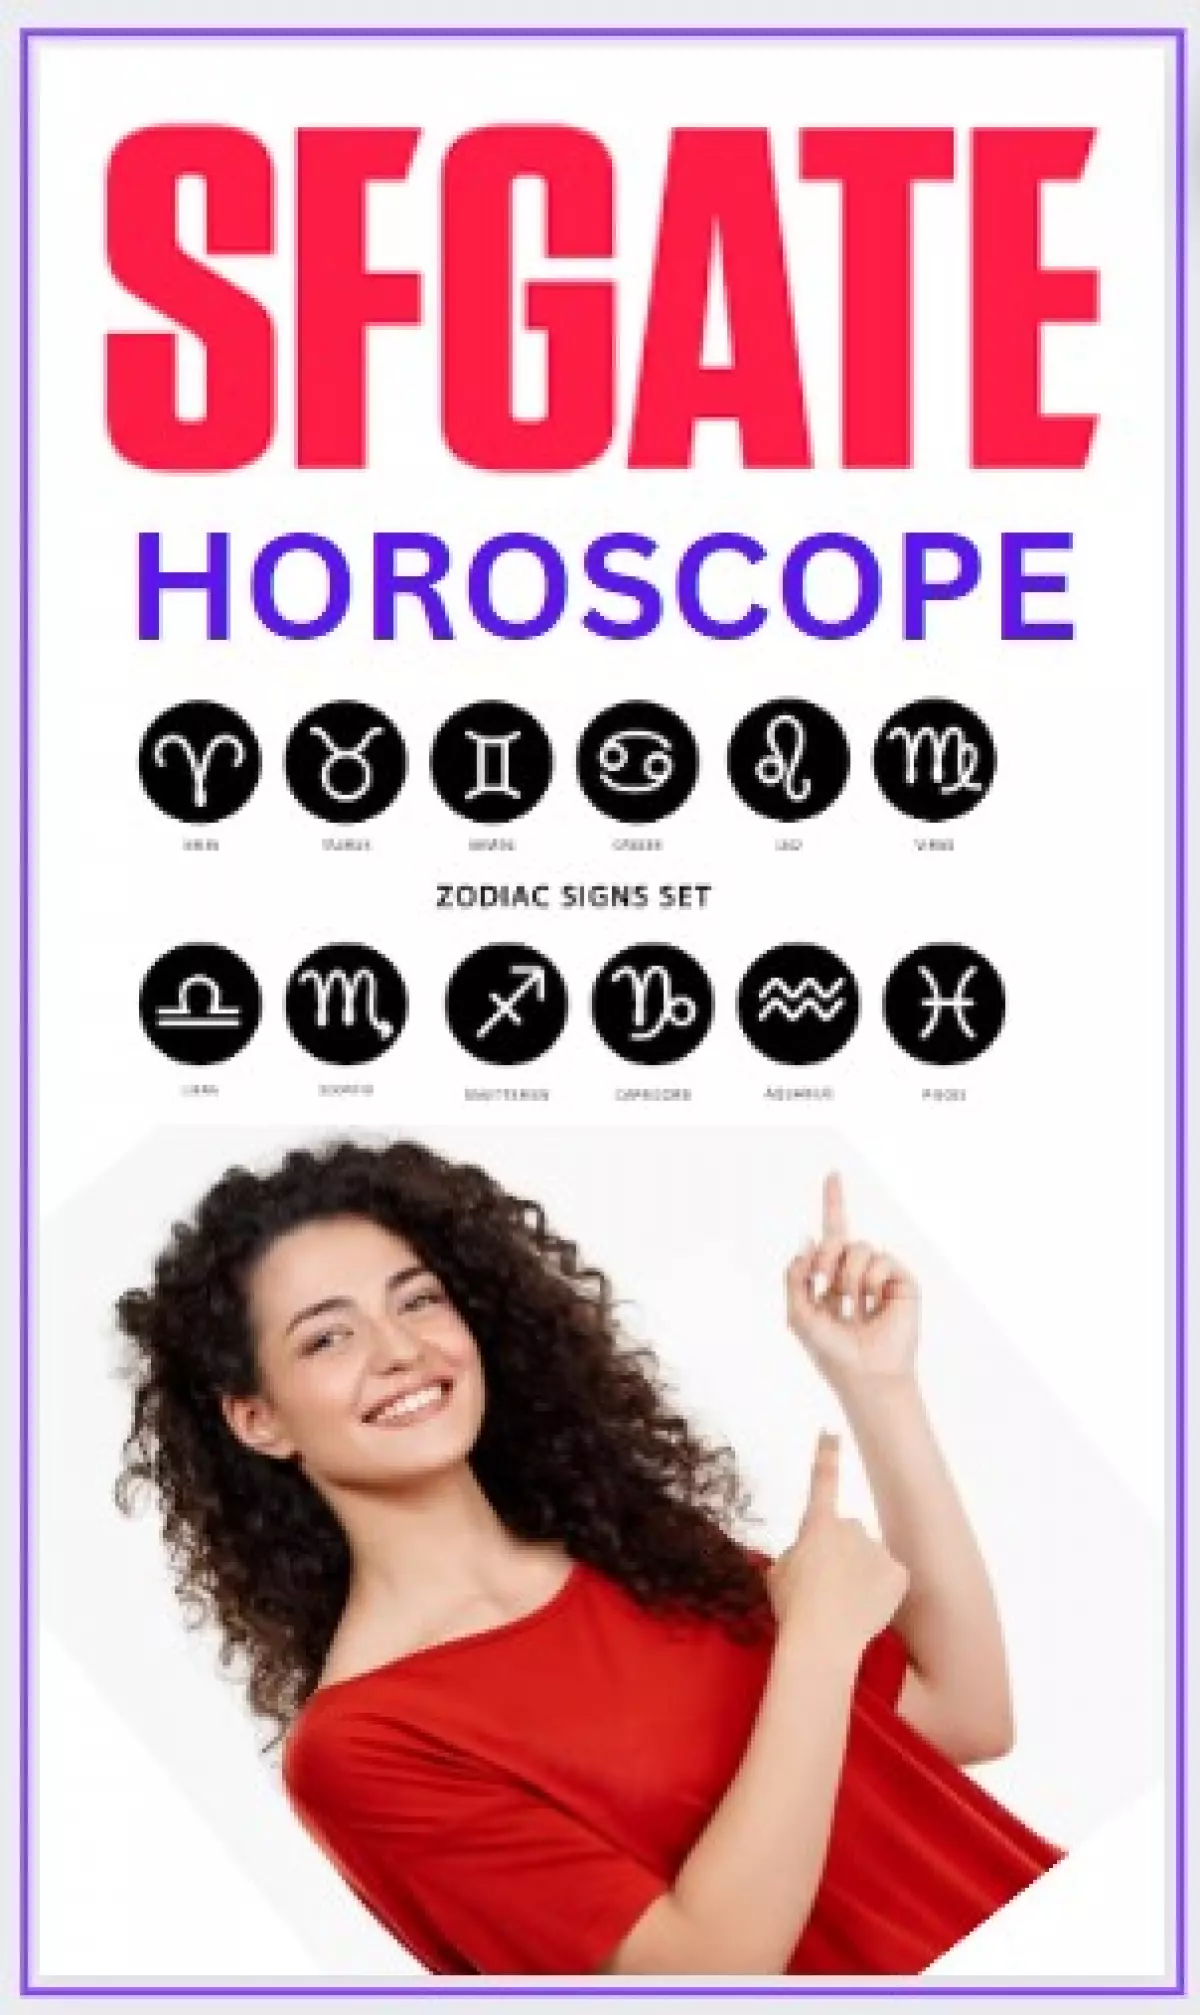 SFGate Horoscope